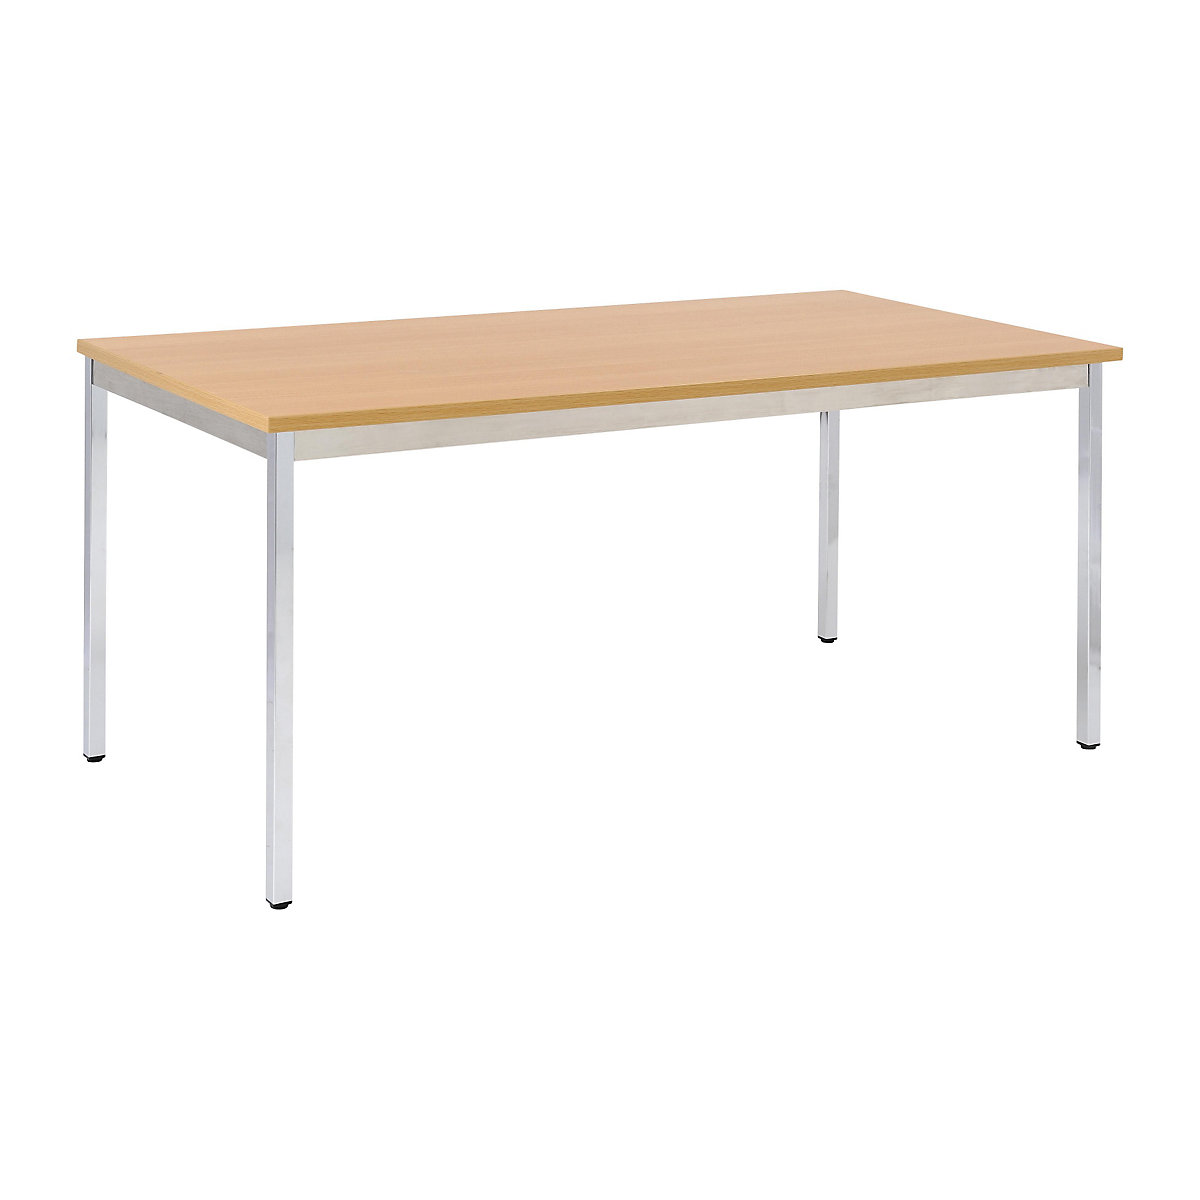 Universele tafel – eurokraft basic, rechthoekig, b x h = 1200 x 740 mm, diepte 600 mm, blad beukenhoutdecor, frame verchroomd